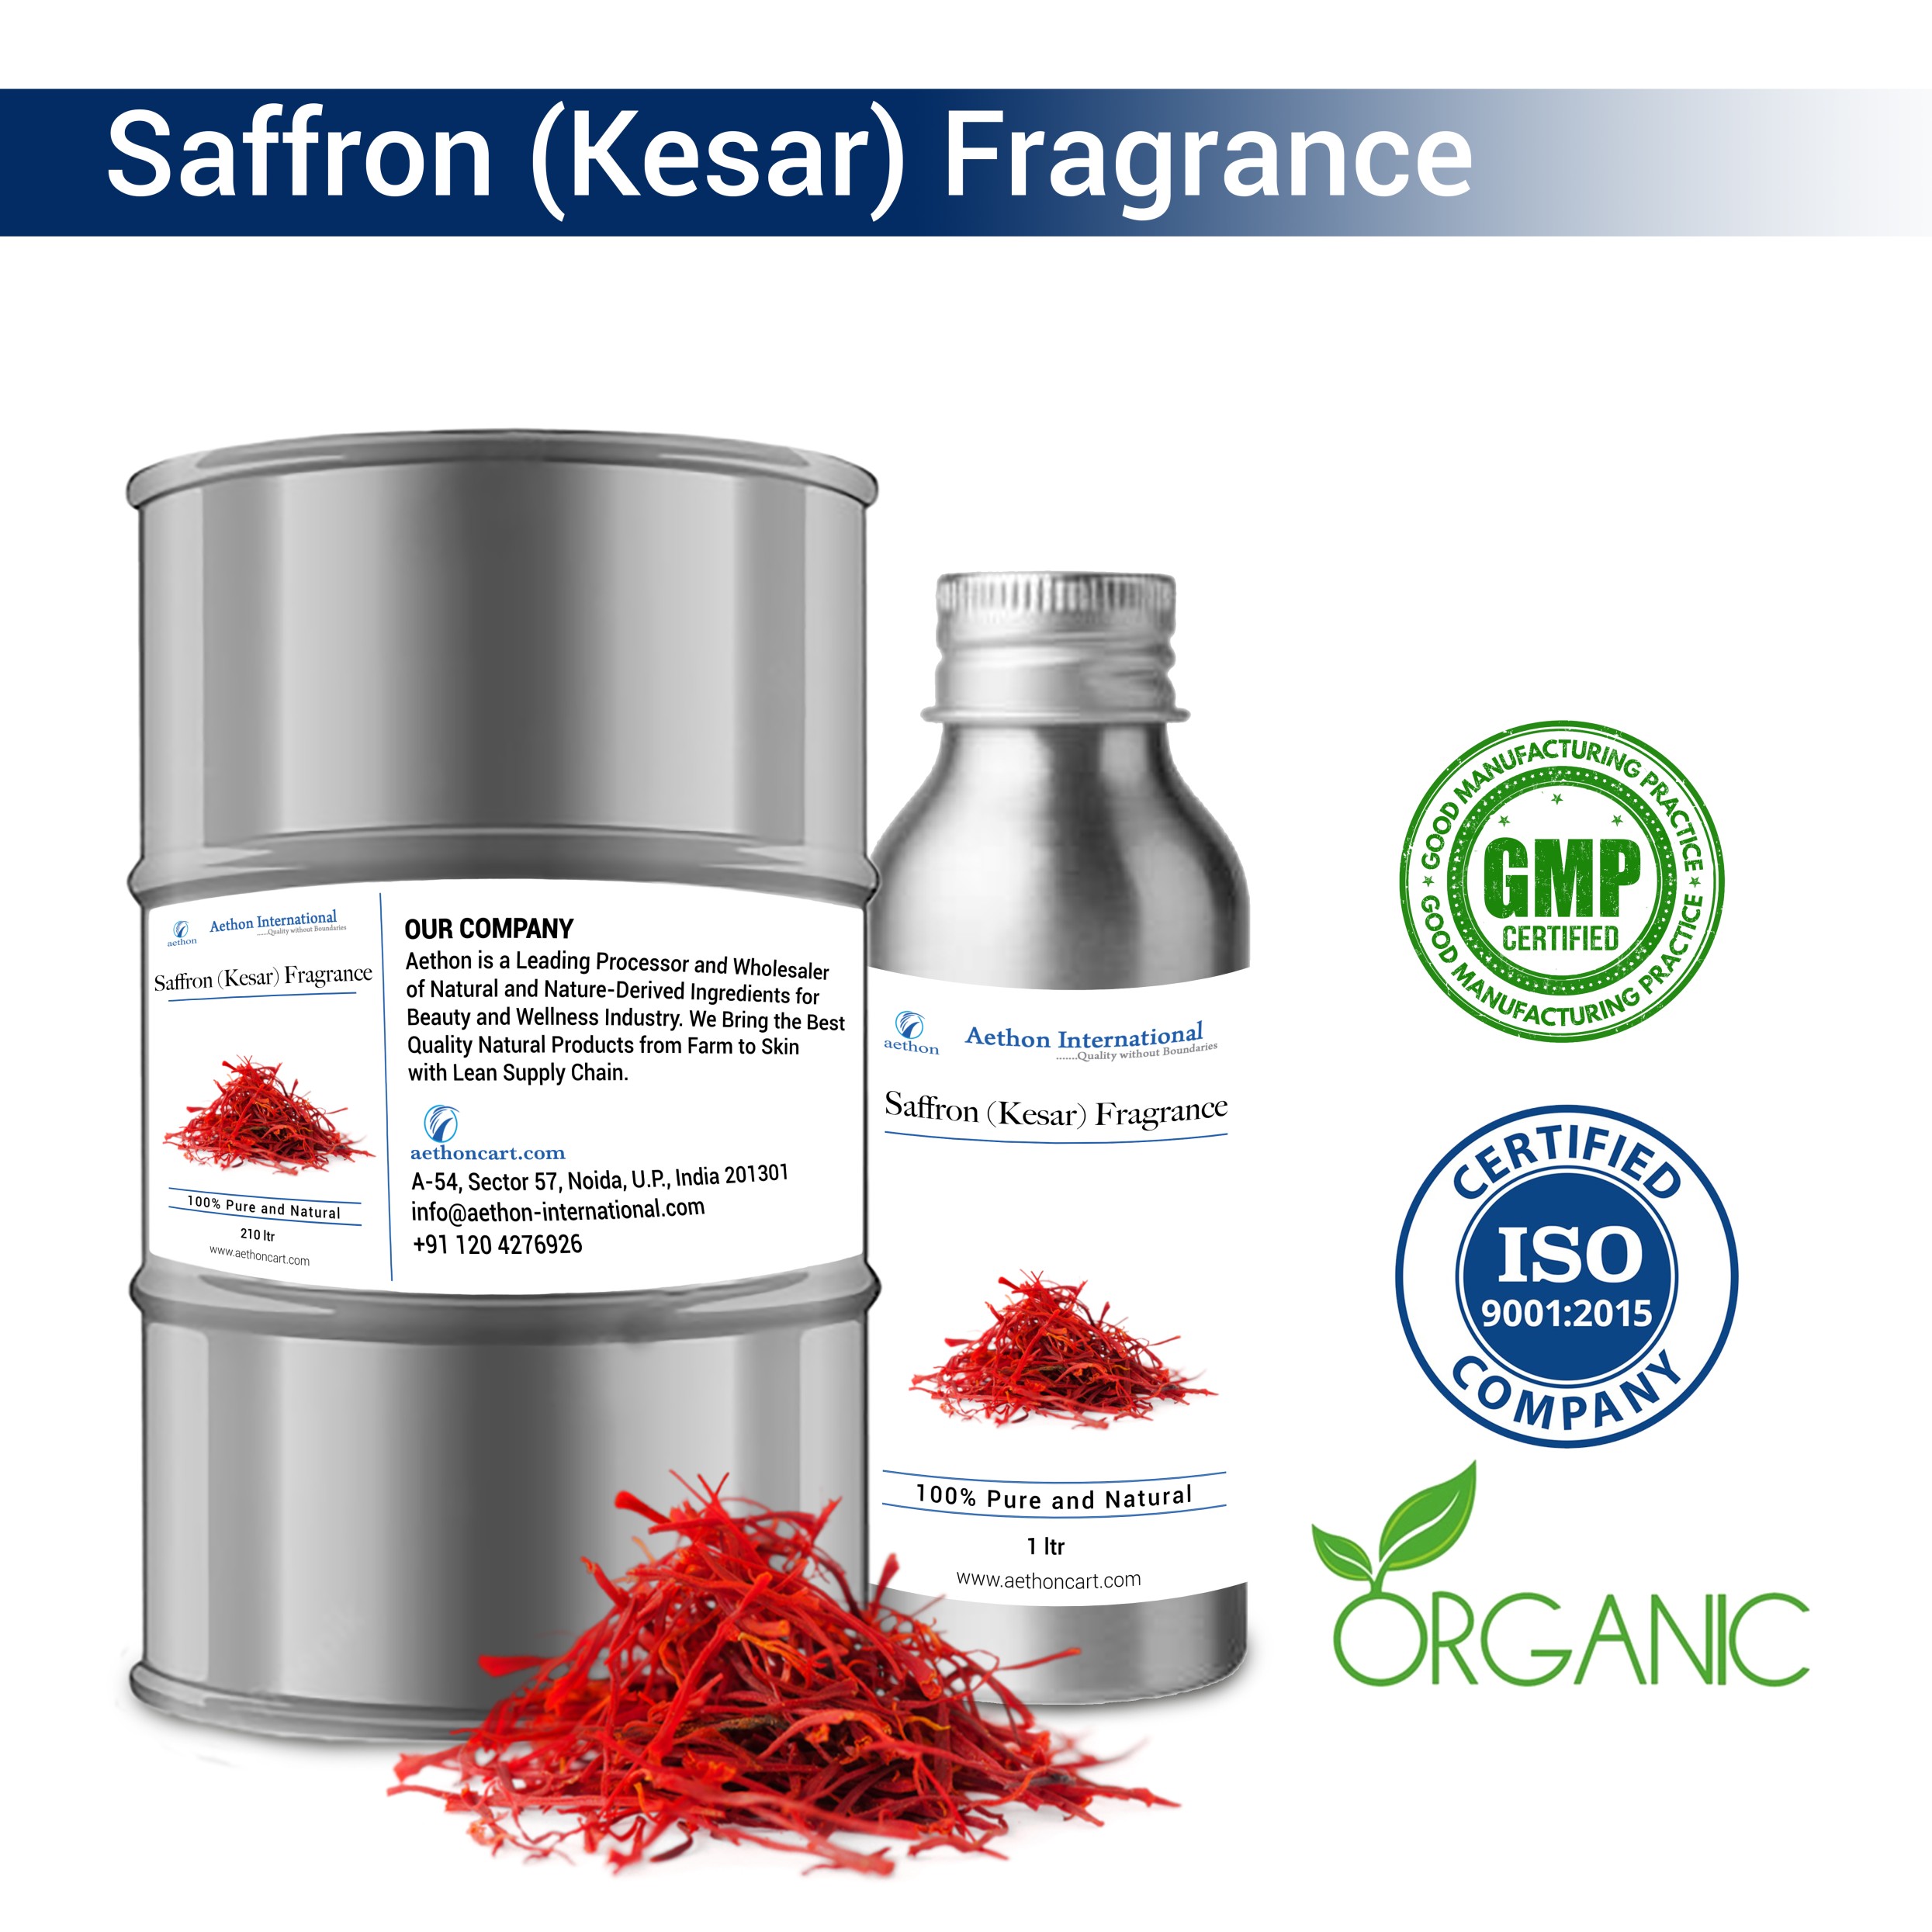 Saffron (Kesar) Fragrance